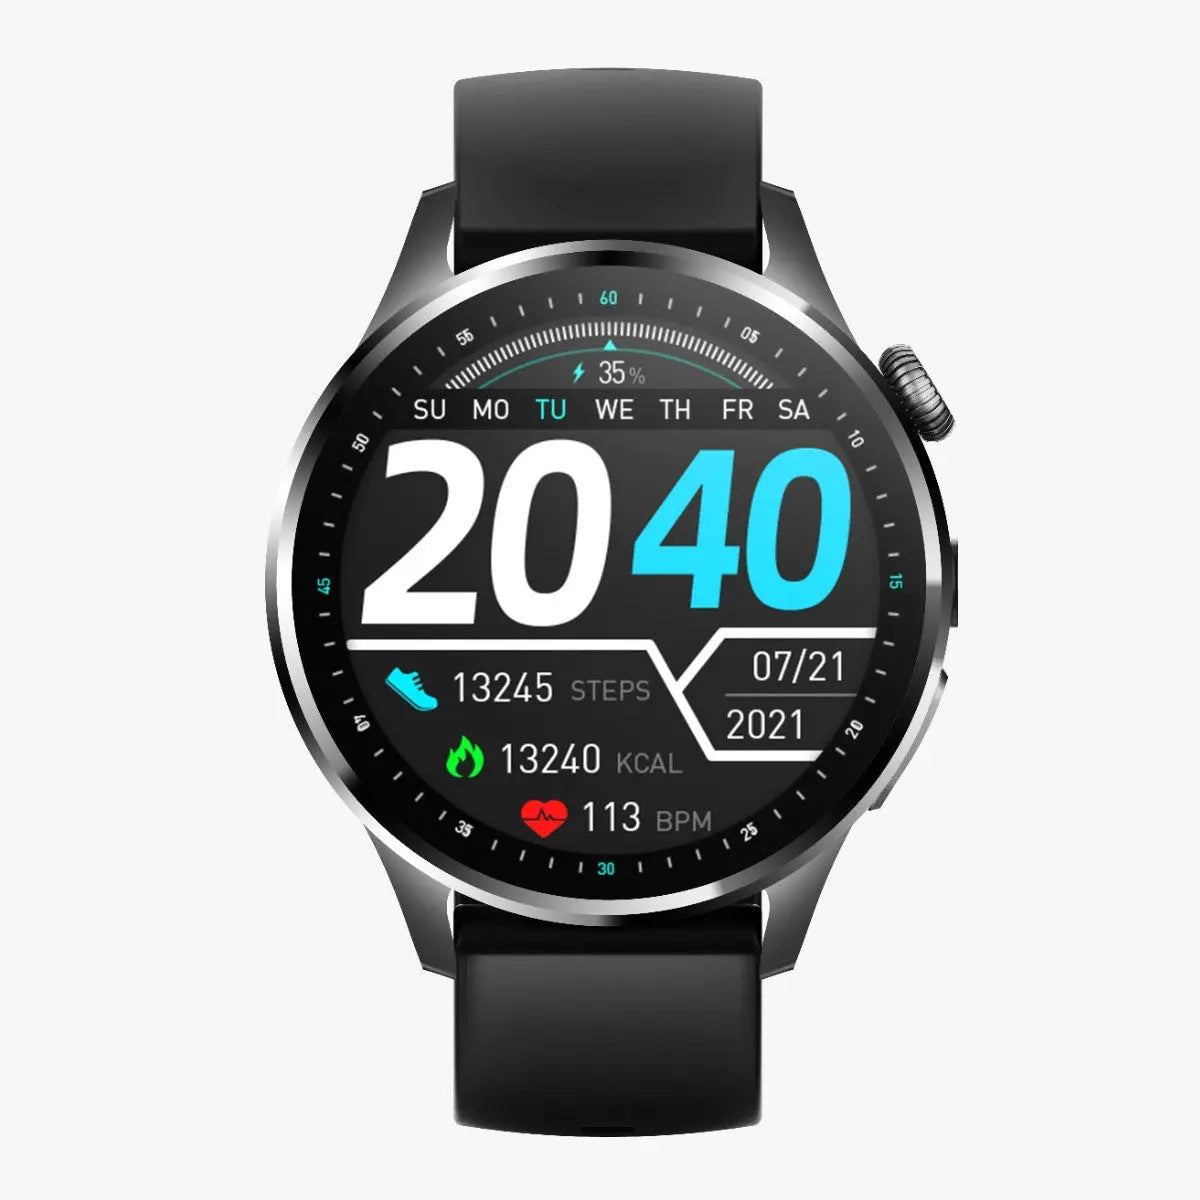 Smartwatch Fralugio X300 Pro Android 8.1, 4GB RAM, 64GB ROM - Fralugio